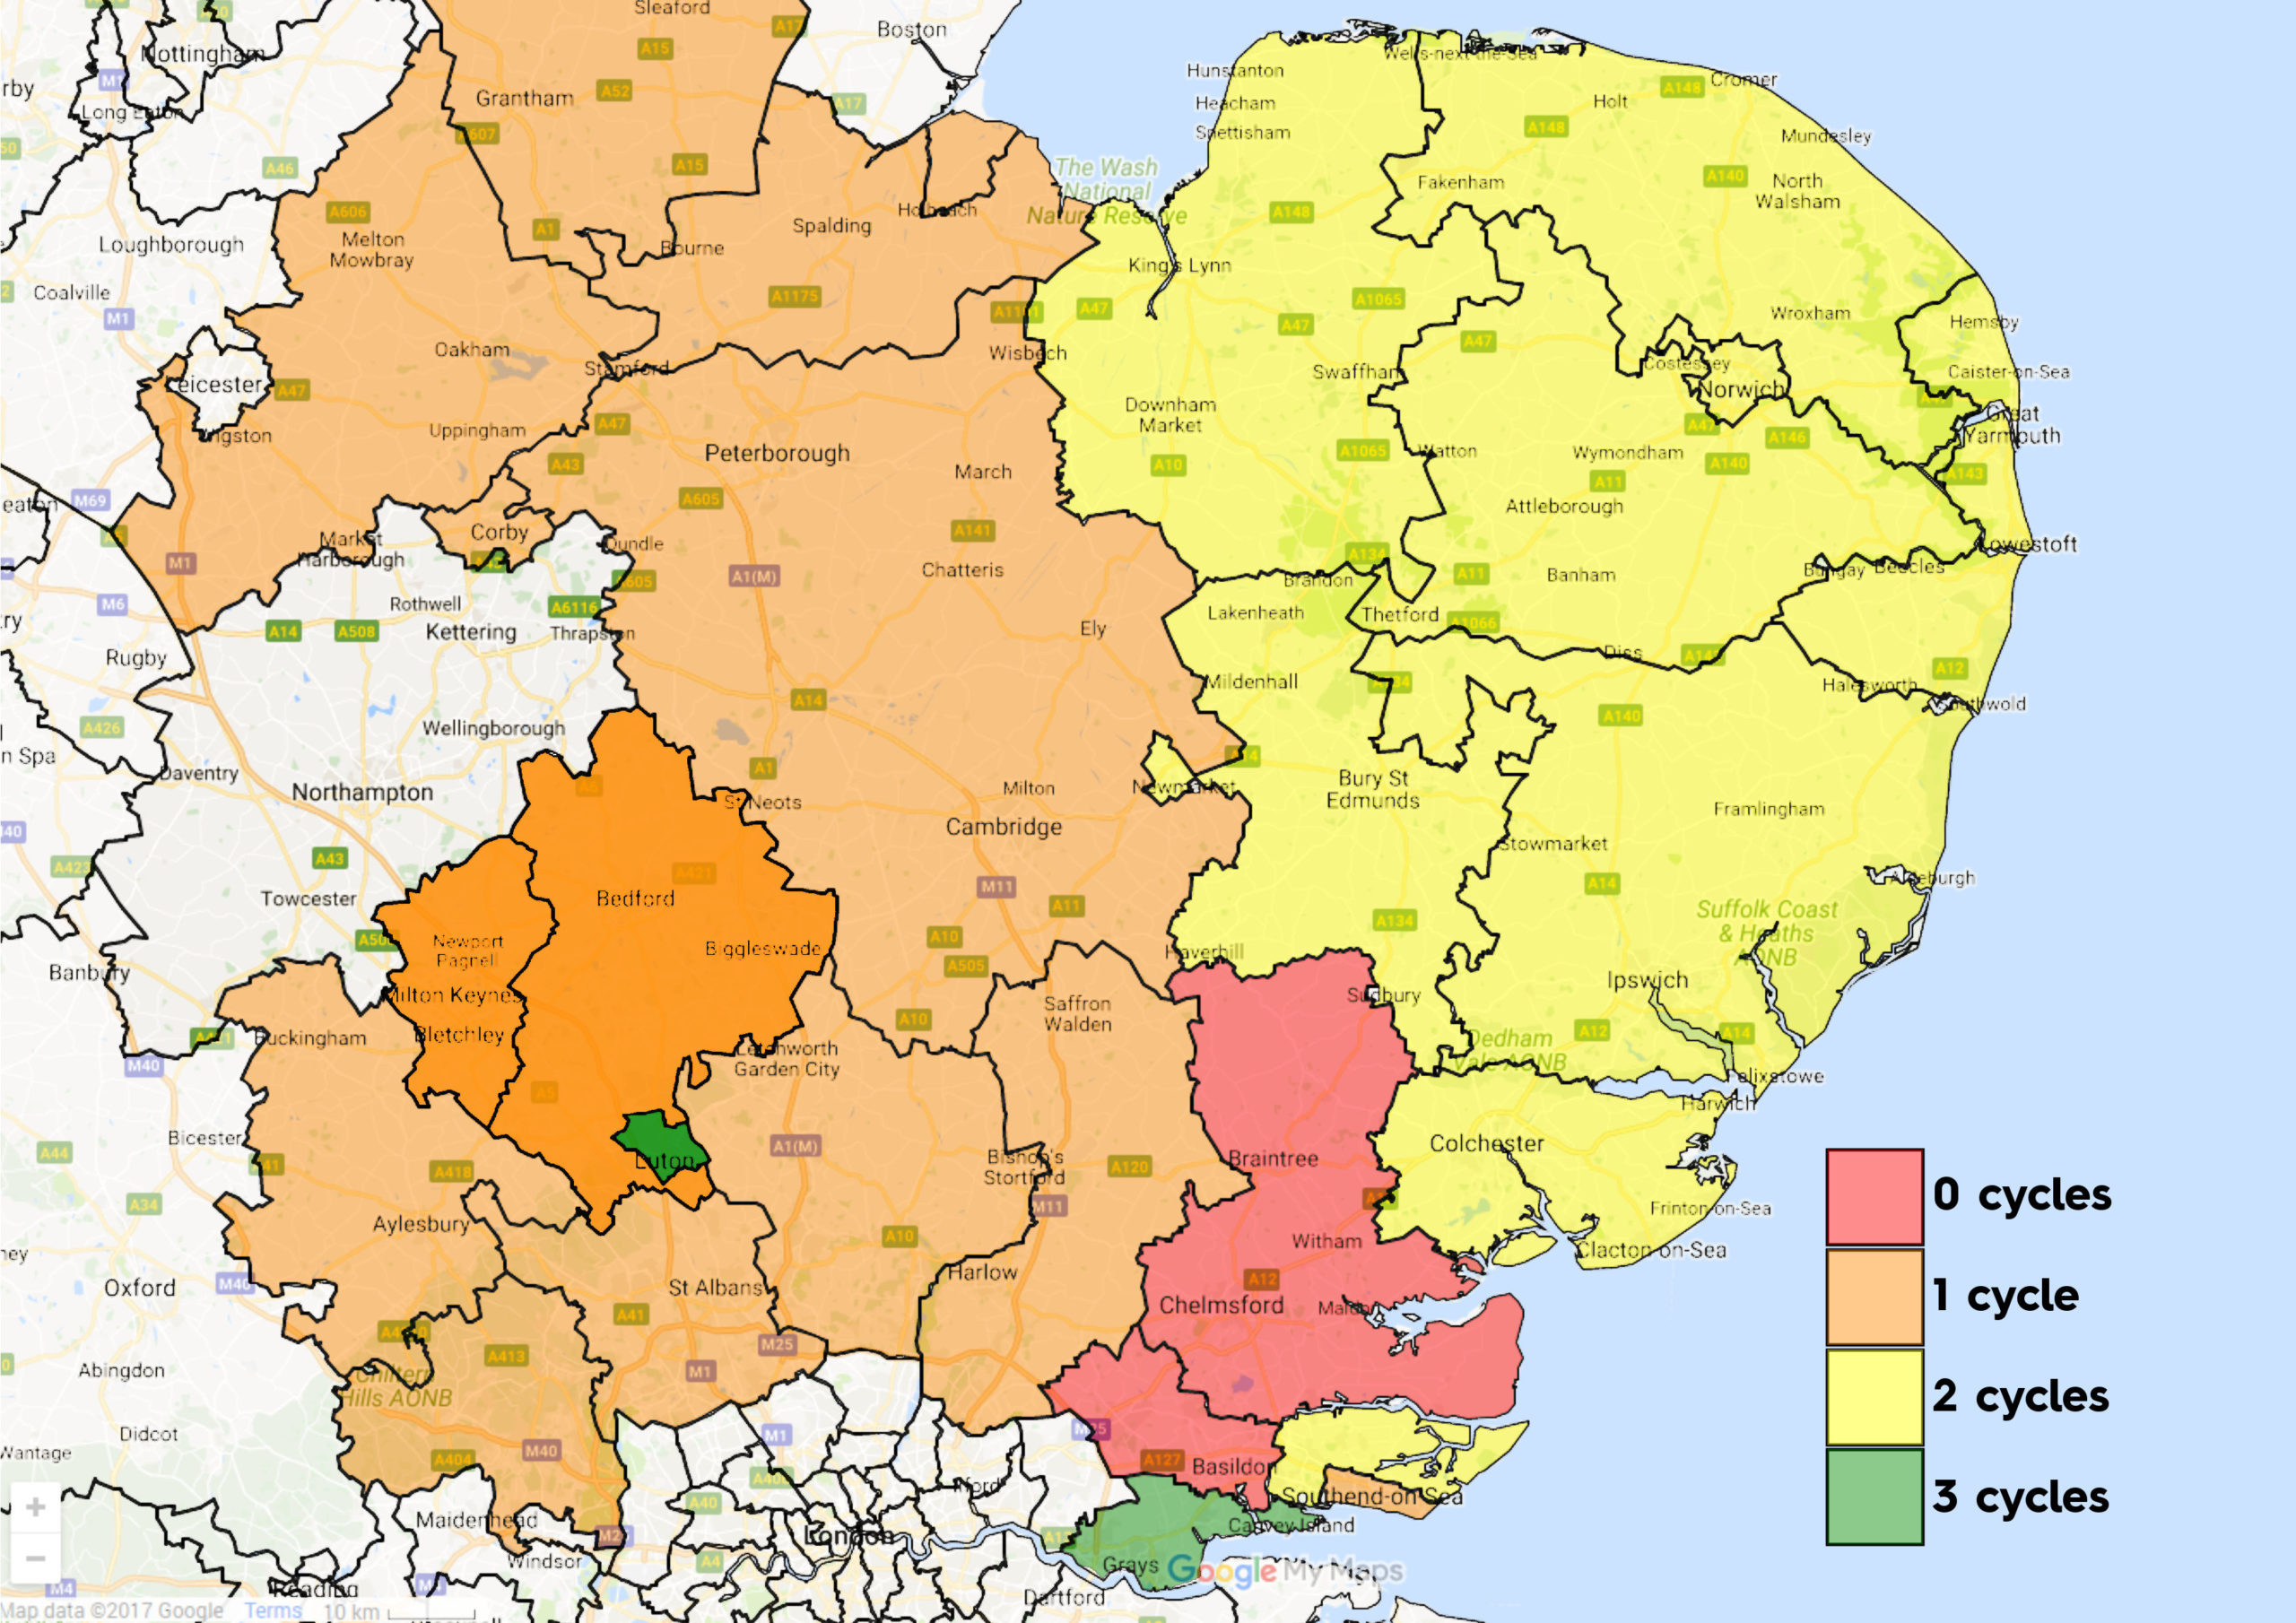 NHS IVF Funding Map for East of England (Bedford, Luton, Milton Keynes Dec 21)